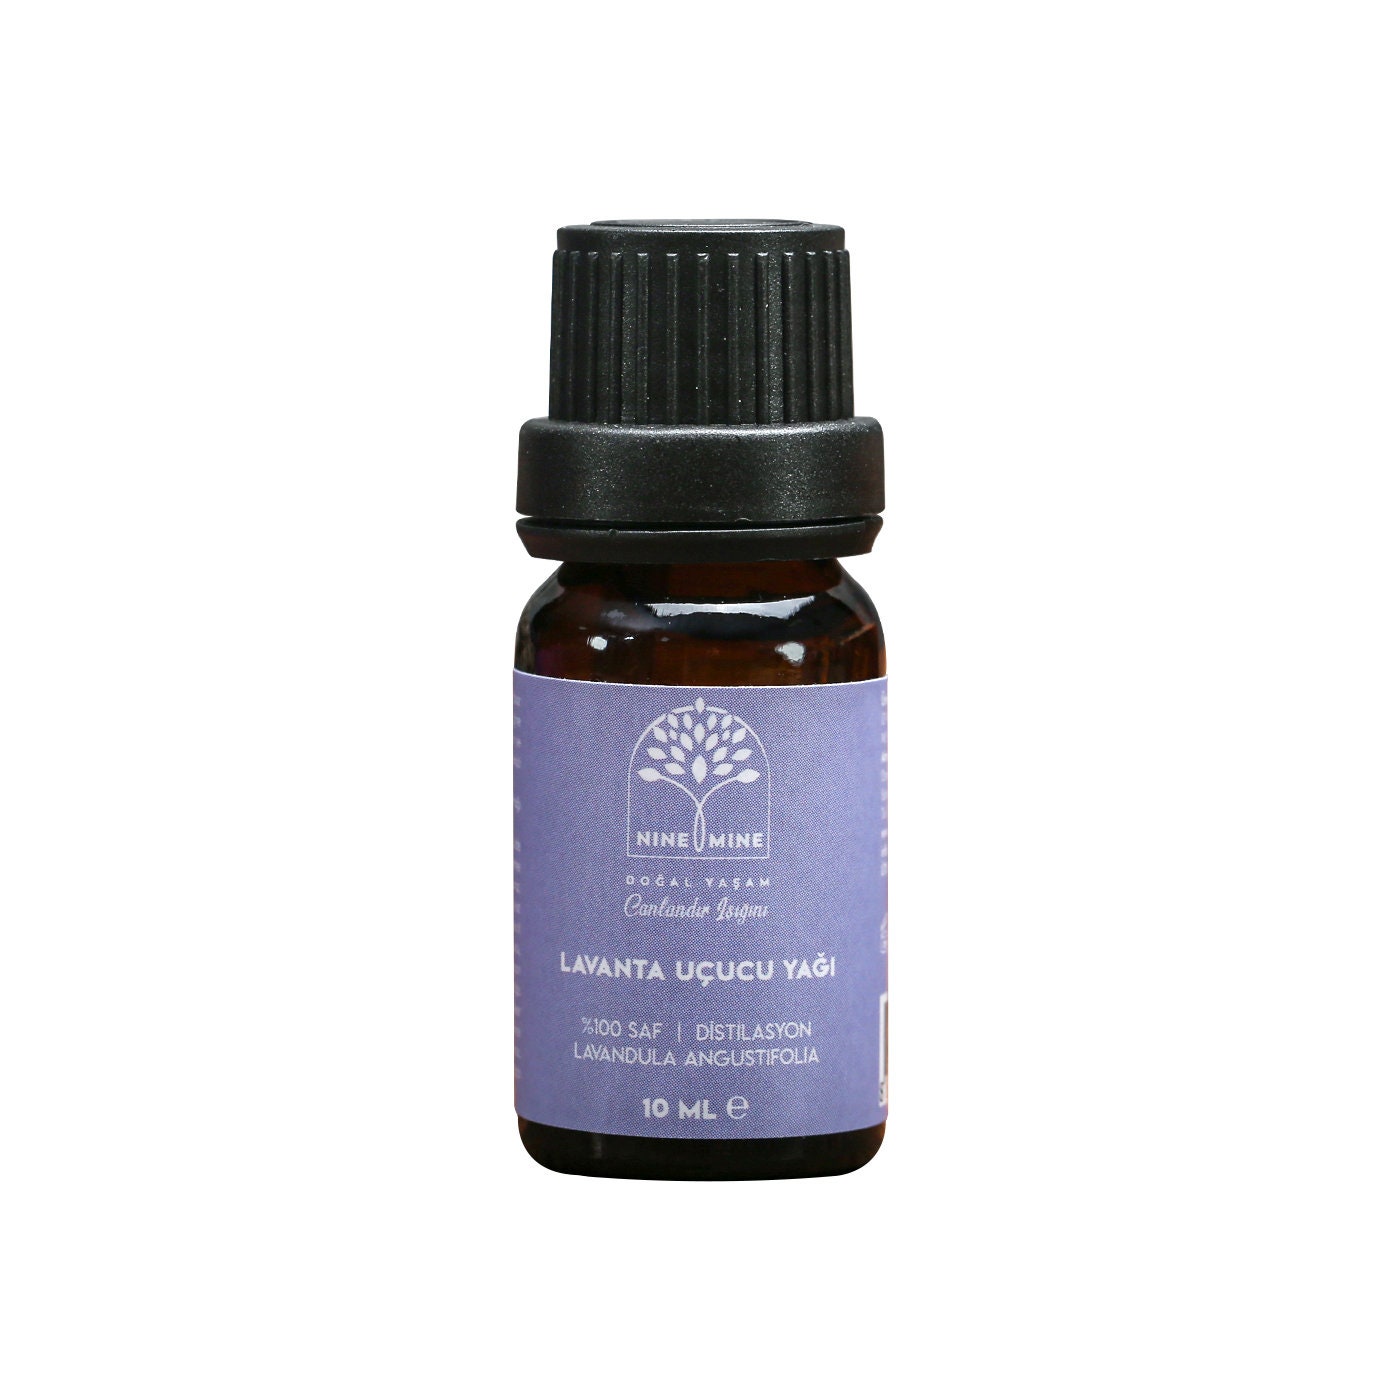 Grosso variety Lavender Essential Oil